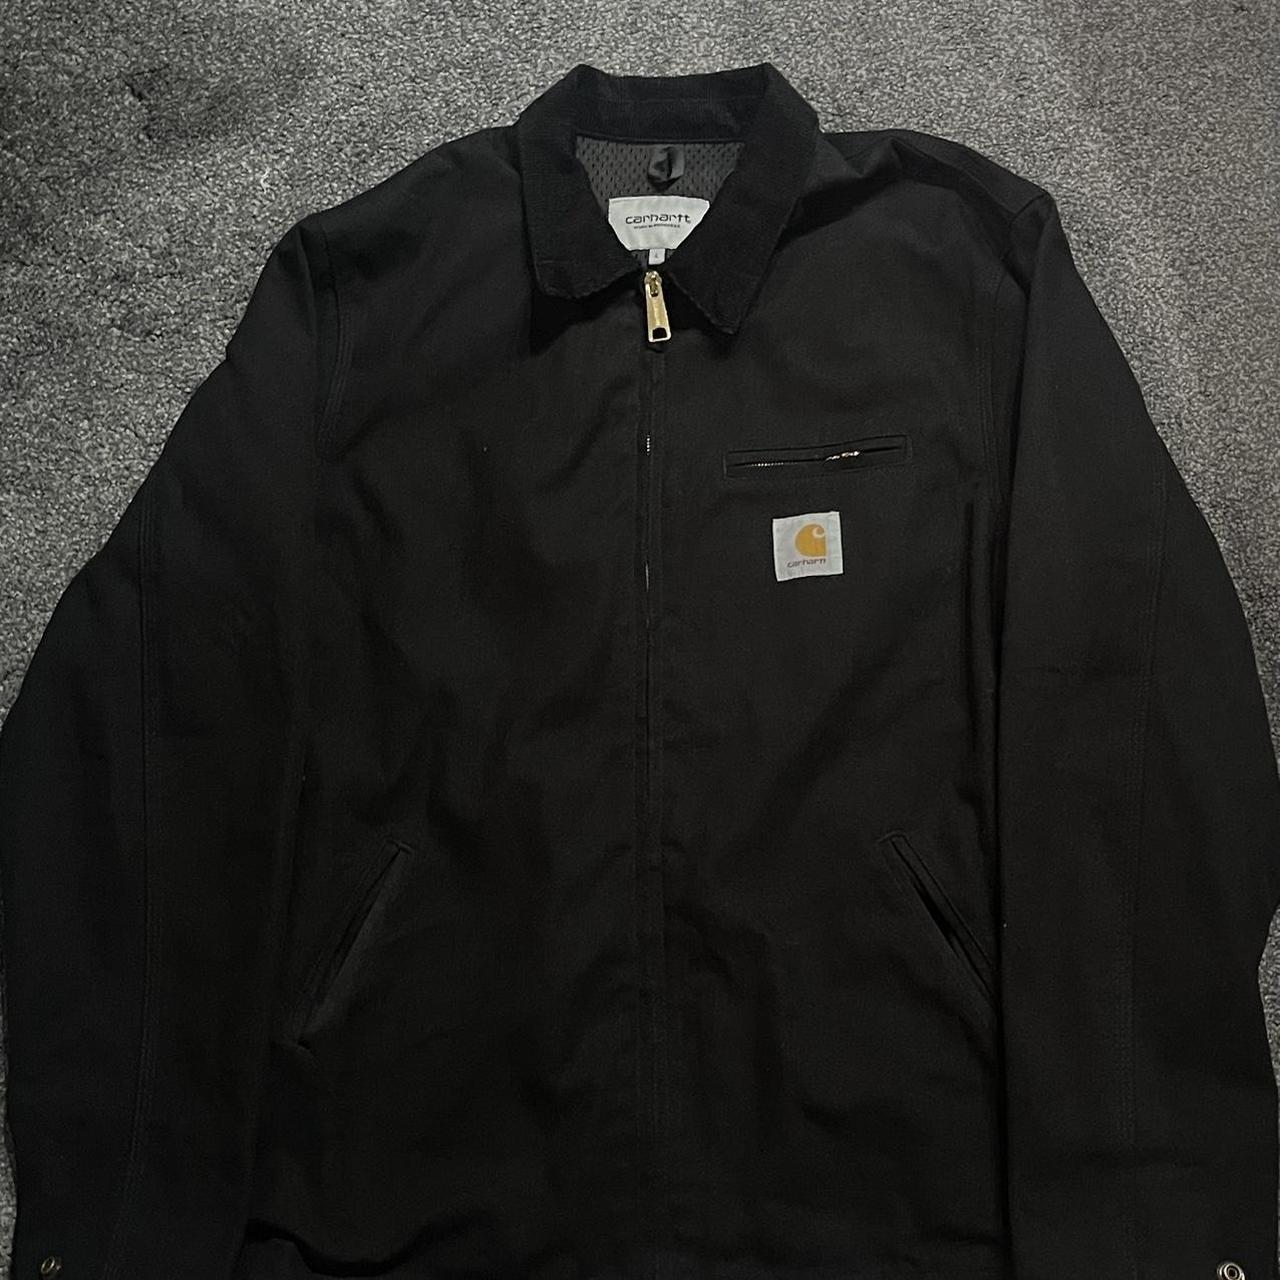 Carharrt detroit jacket black large perfect... - Depop